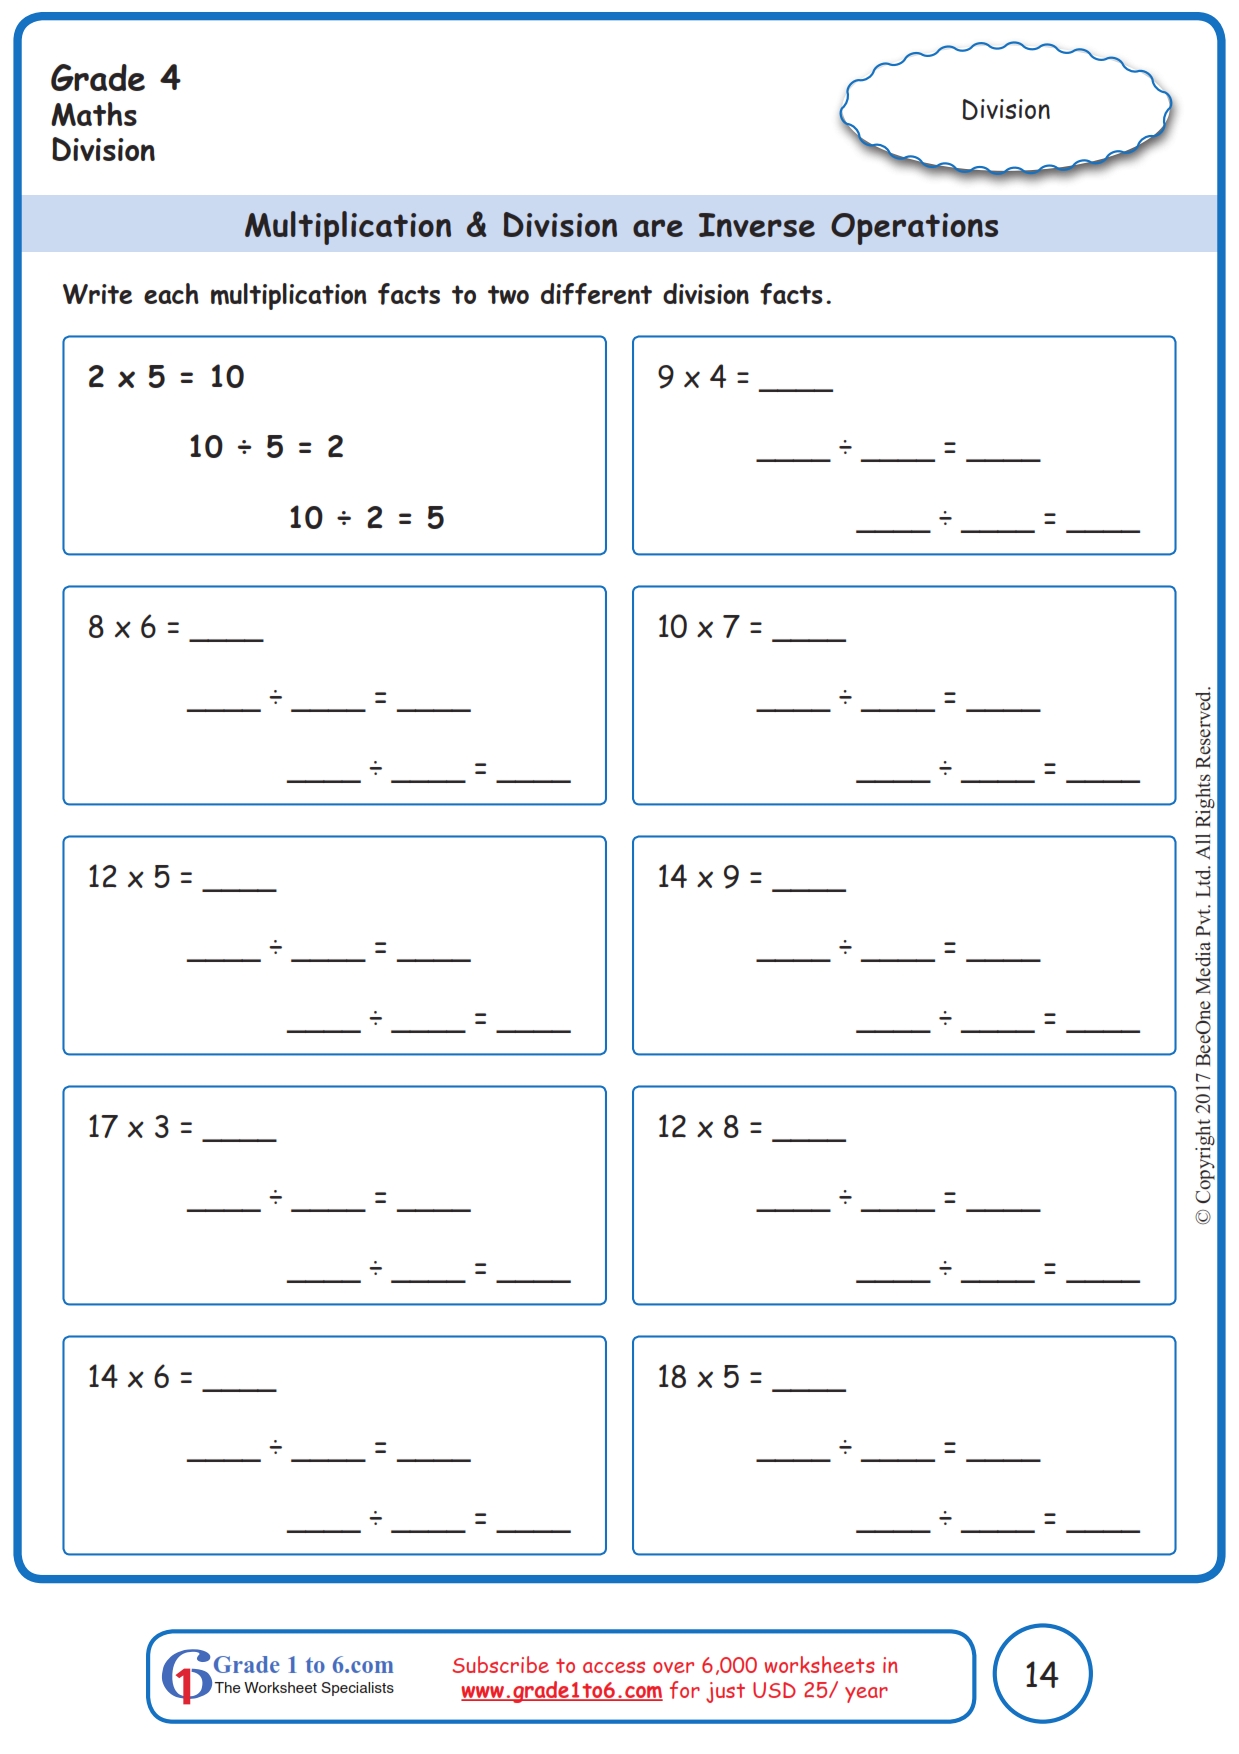 Division As Inverse Of Multiplication Worksheet Grade 2